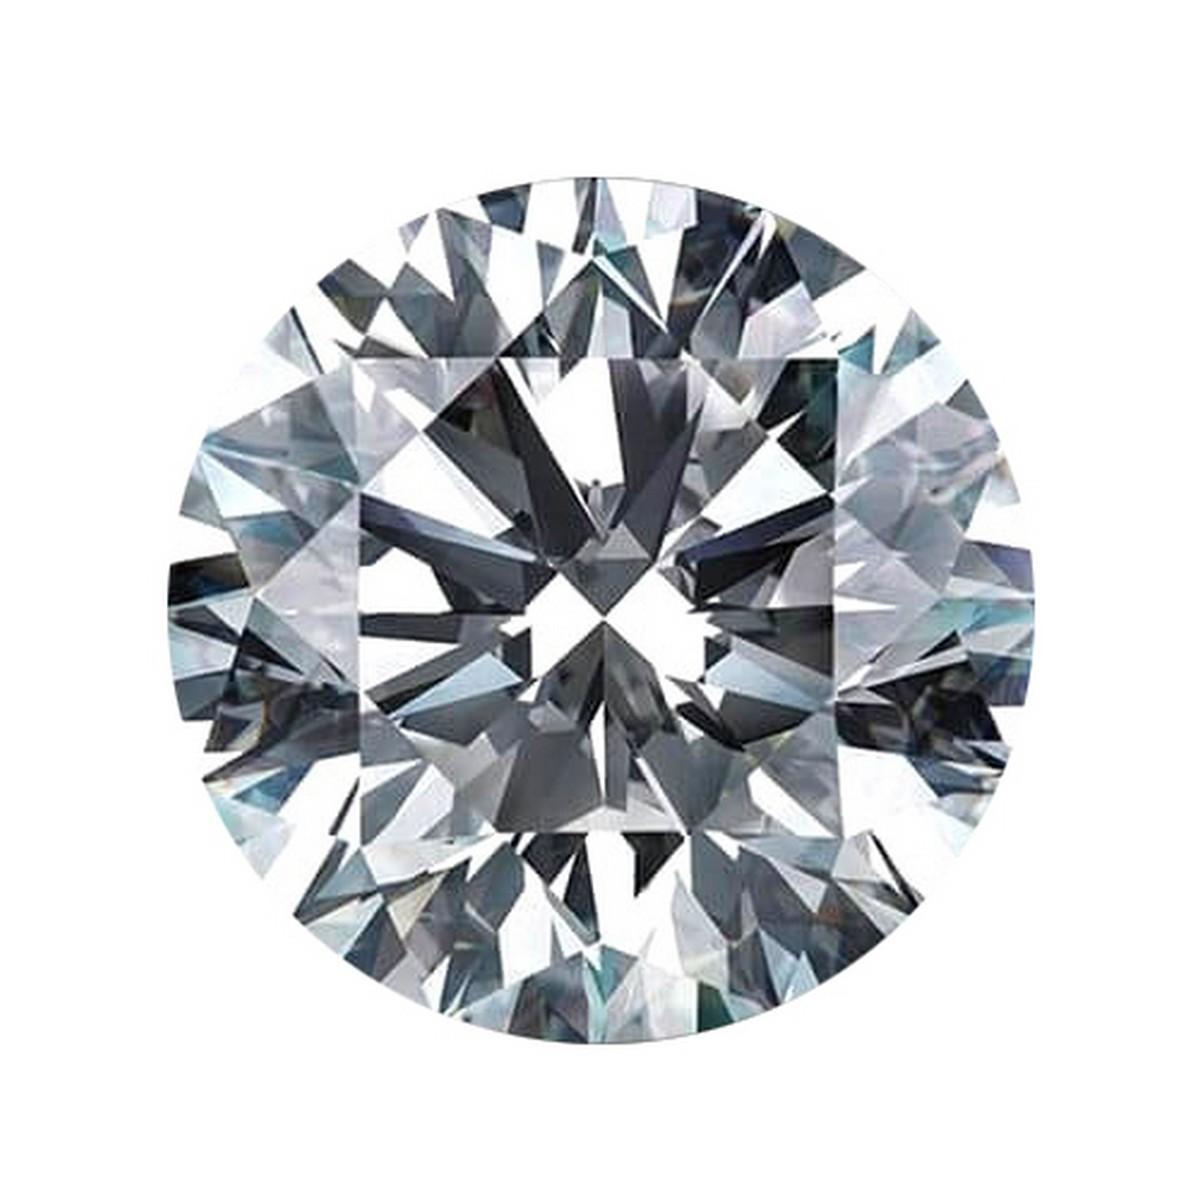 2.63 ctw. VVS2 IGI Certified Round Cut Loose Diamond (LAB GROWN)